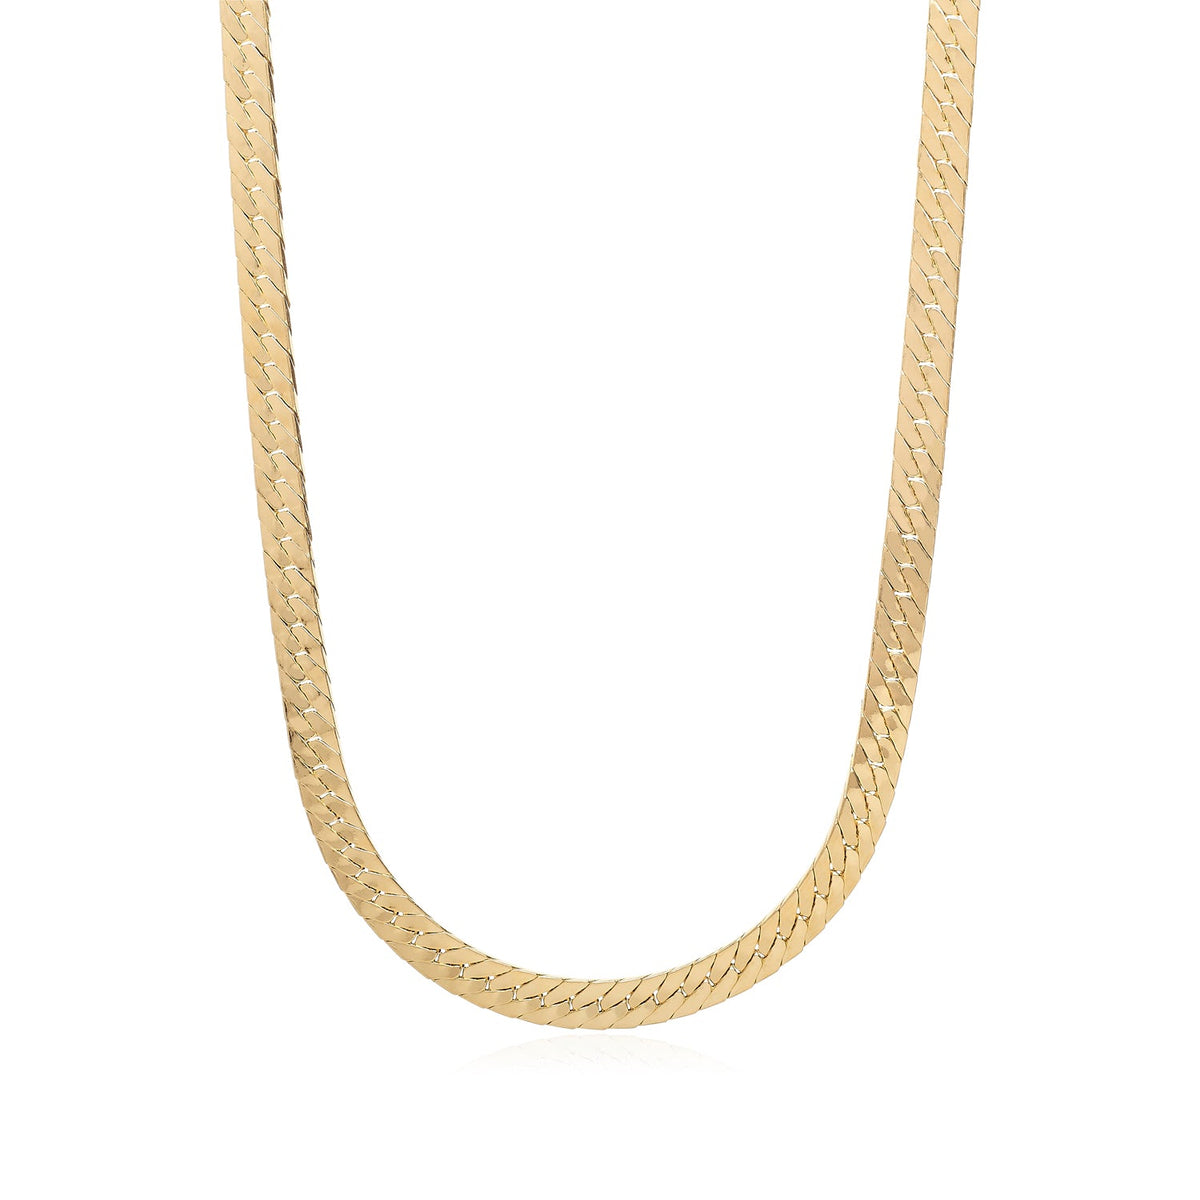 Olaeda Fancy Herringbone Chain Necklace - 16"